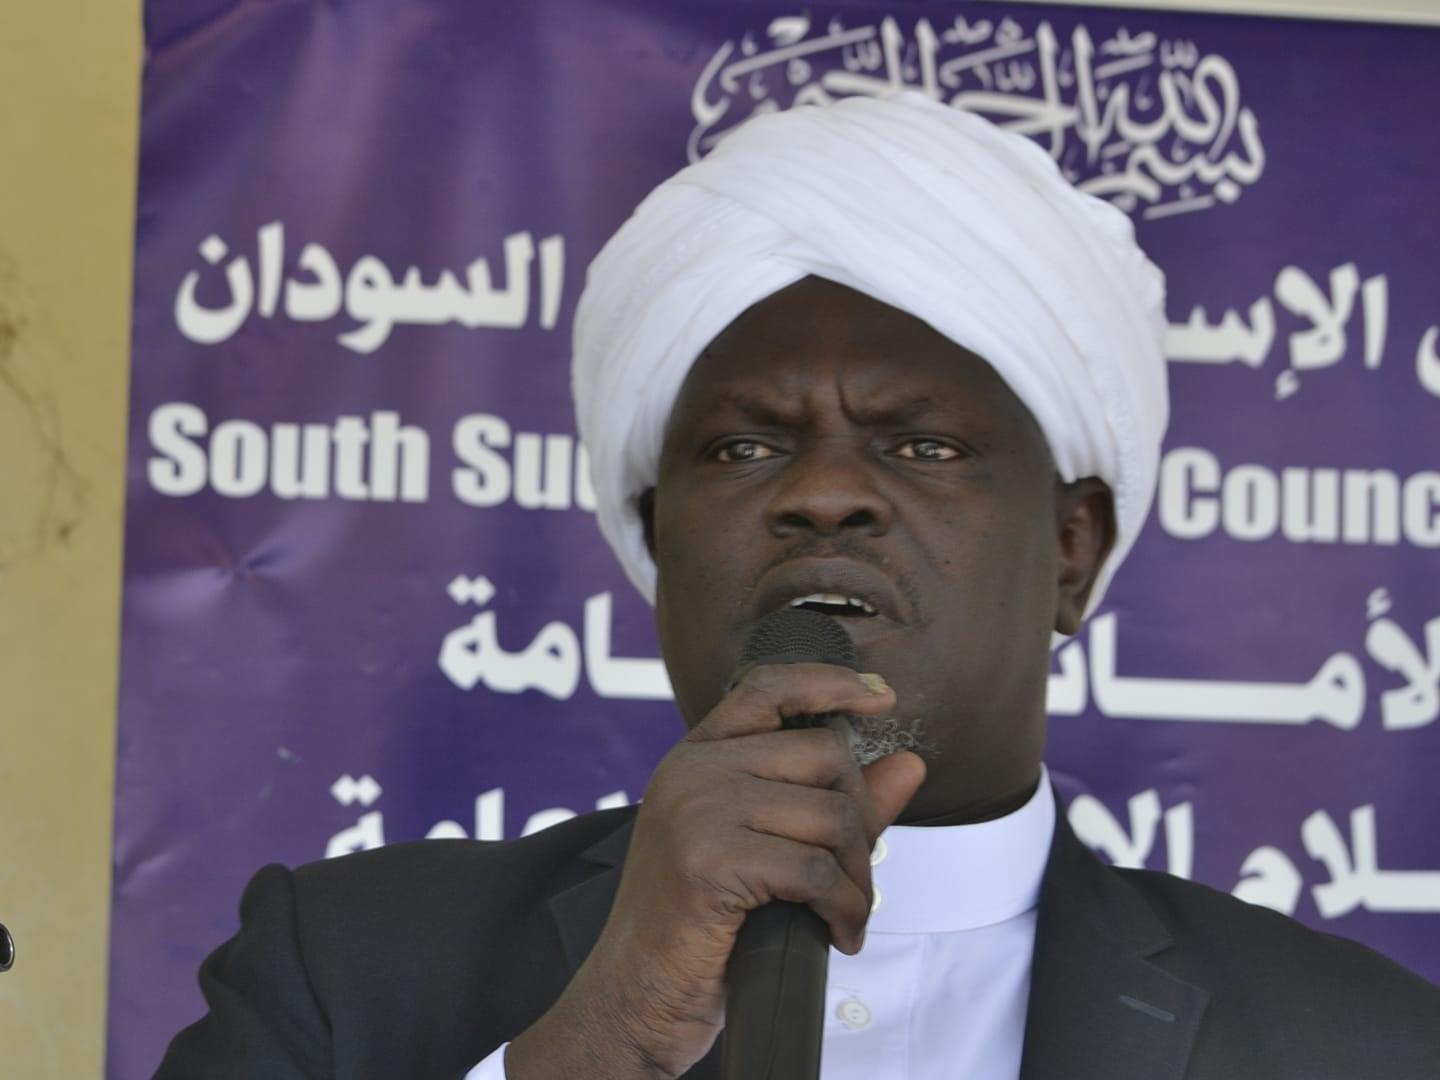 South Sudan education system lacks Islamic curriculum: Cleric